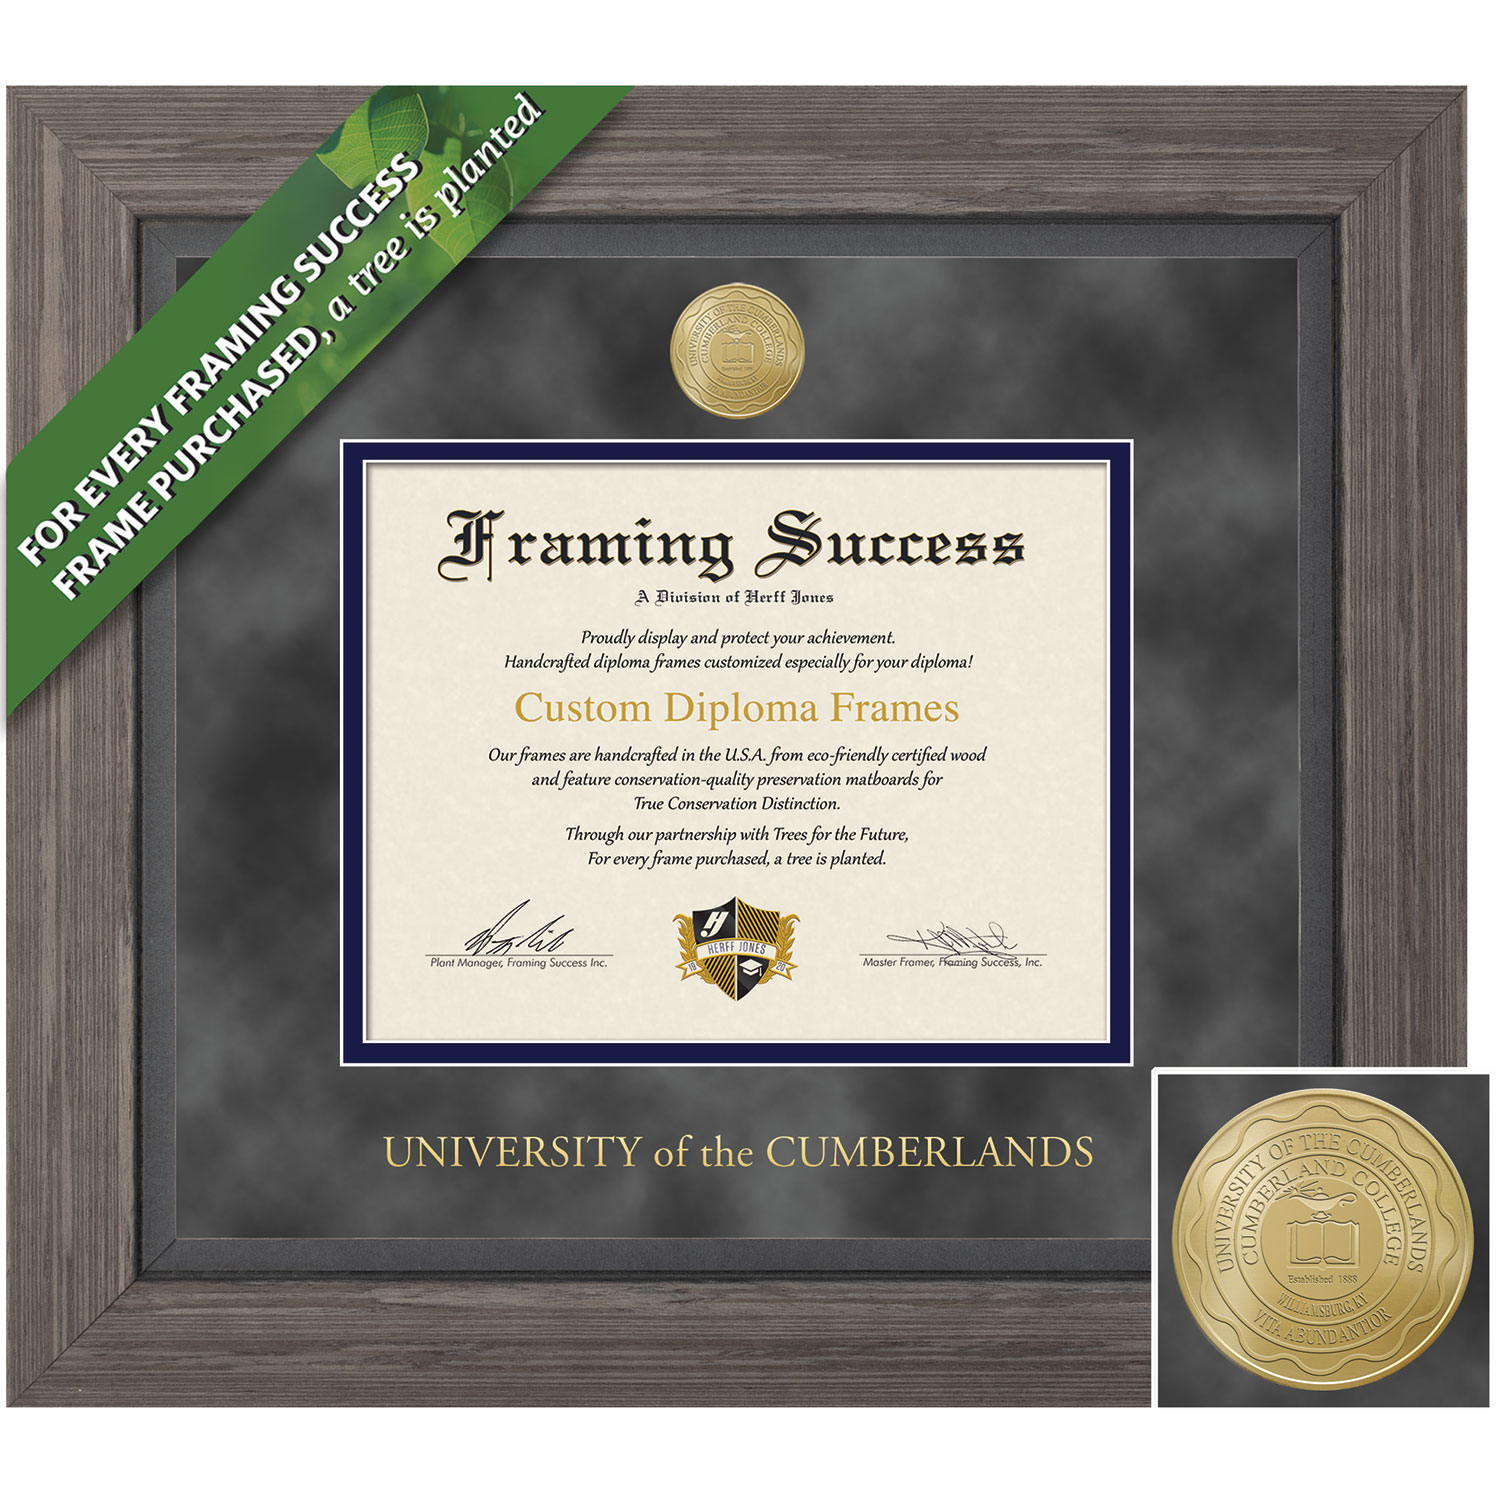 Framing Success 9 x 12 Greystone Gold Medallion Masters Diploma Frame